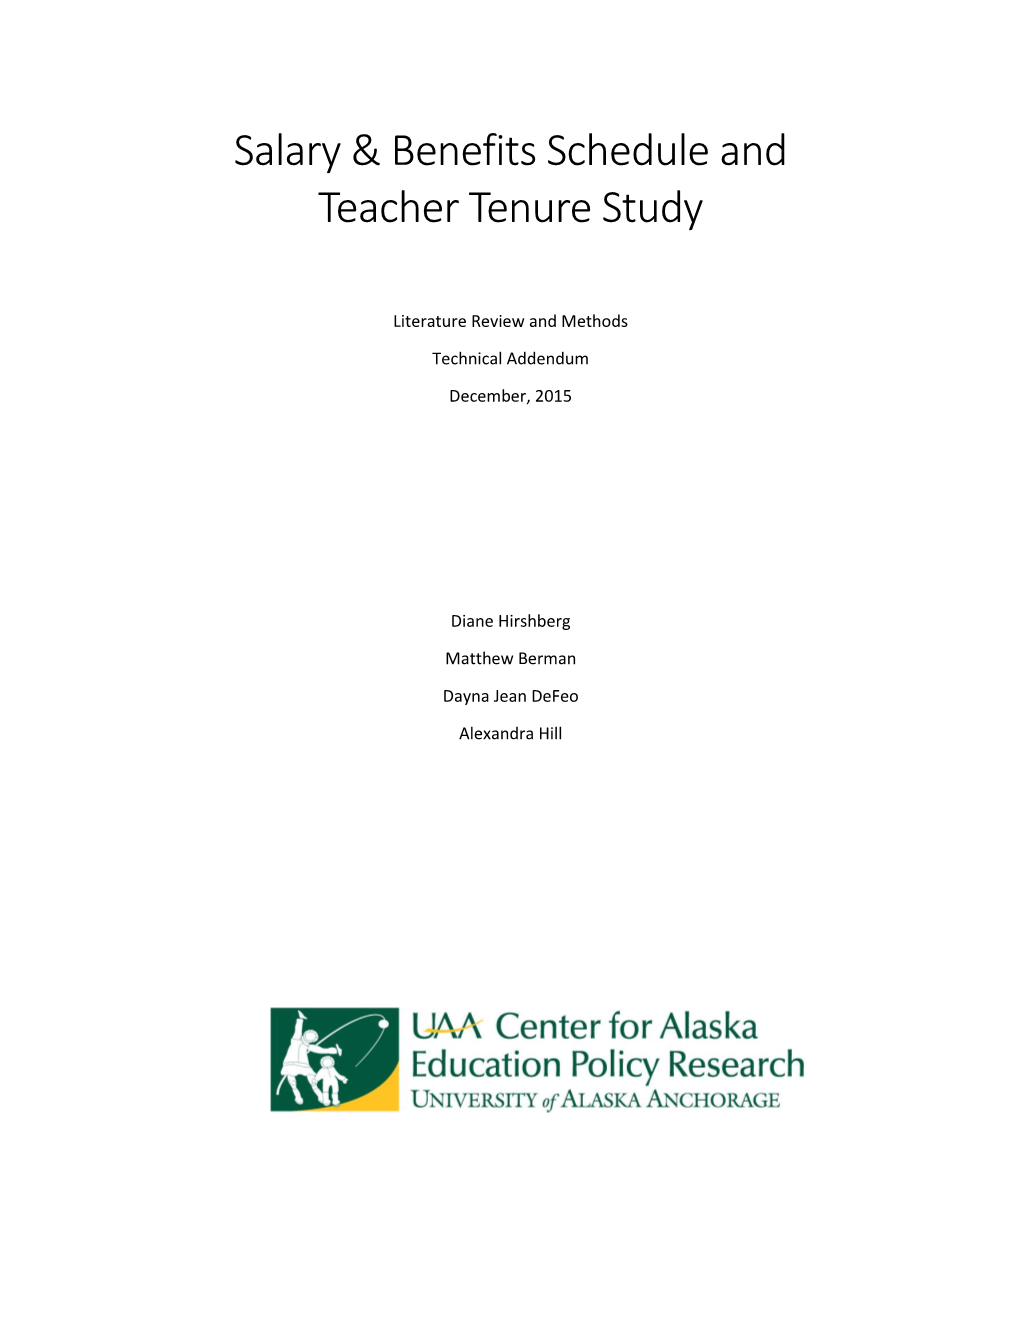 Salary & Benefits Schedule and Teacher Tenure Study